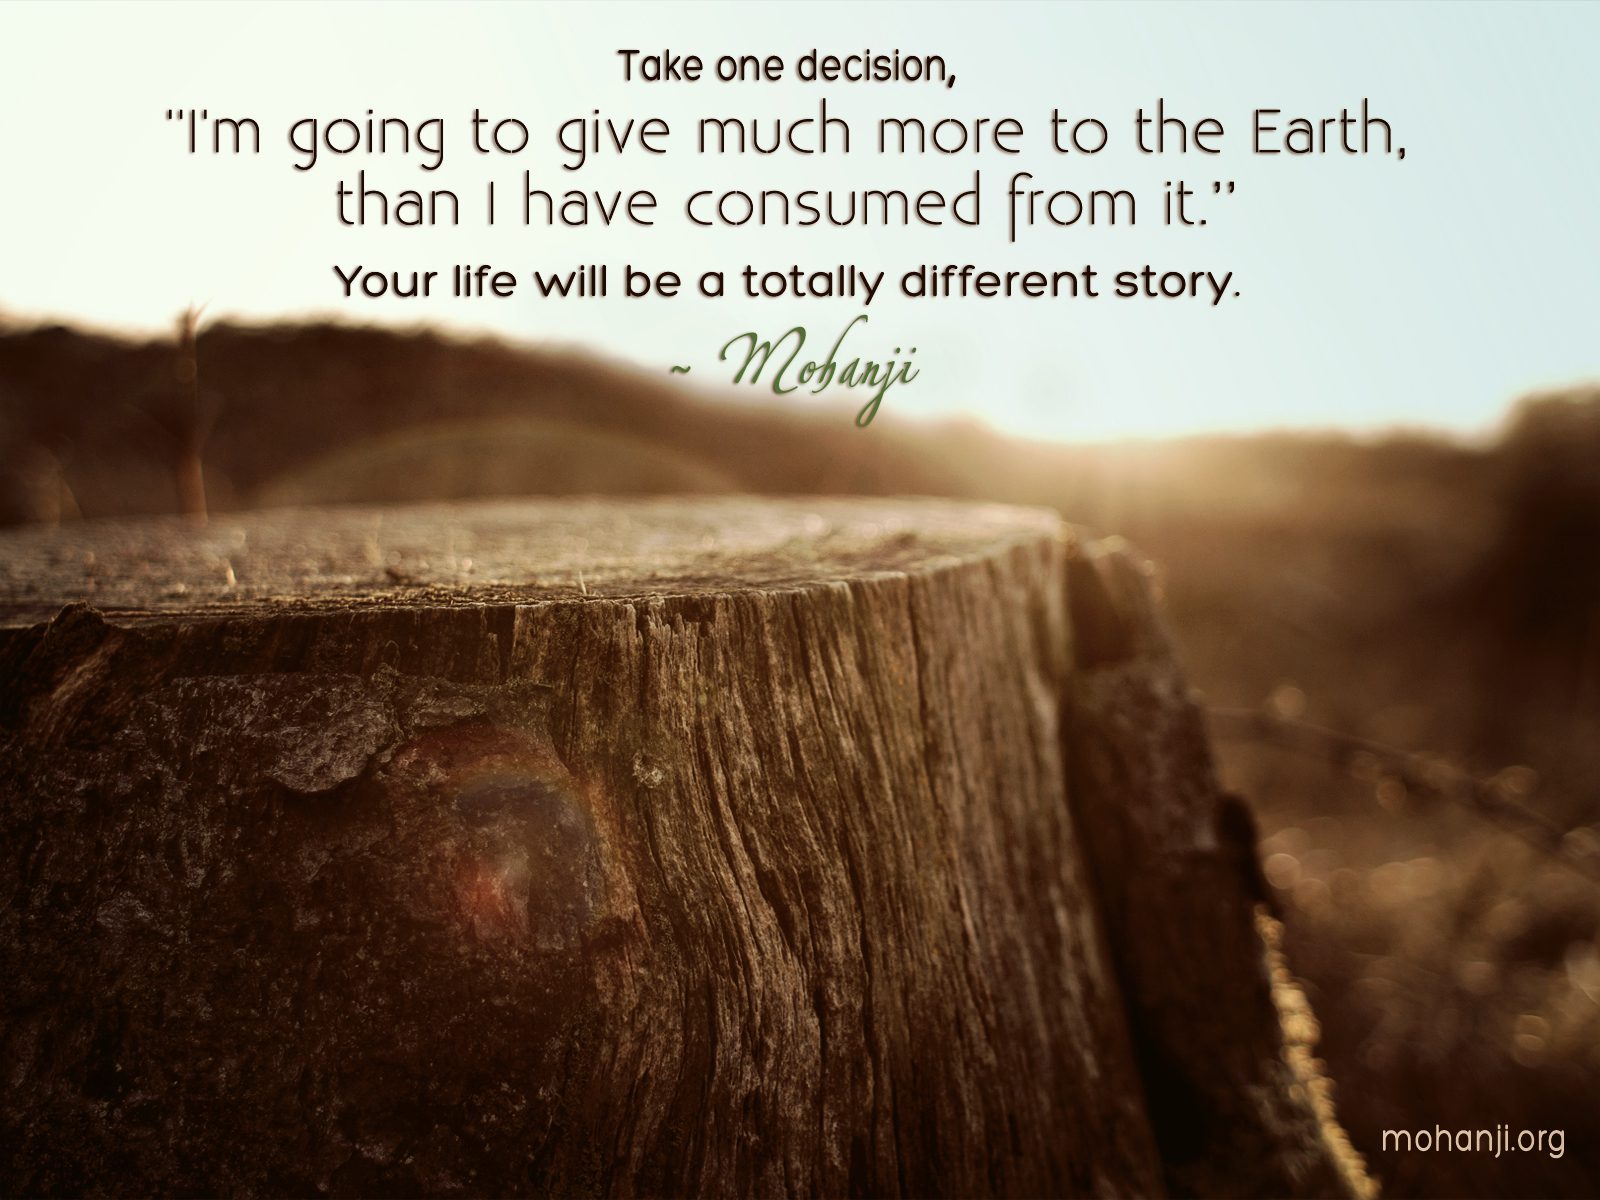 Mohanji quote - Take one decision